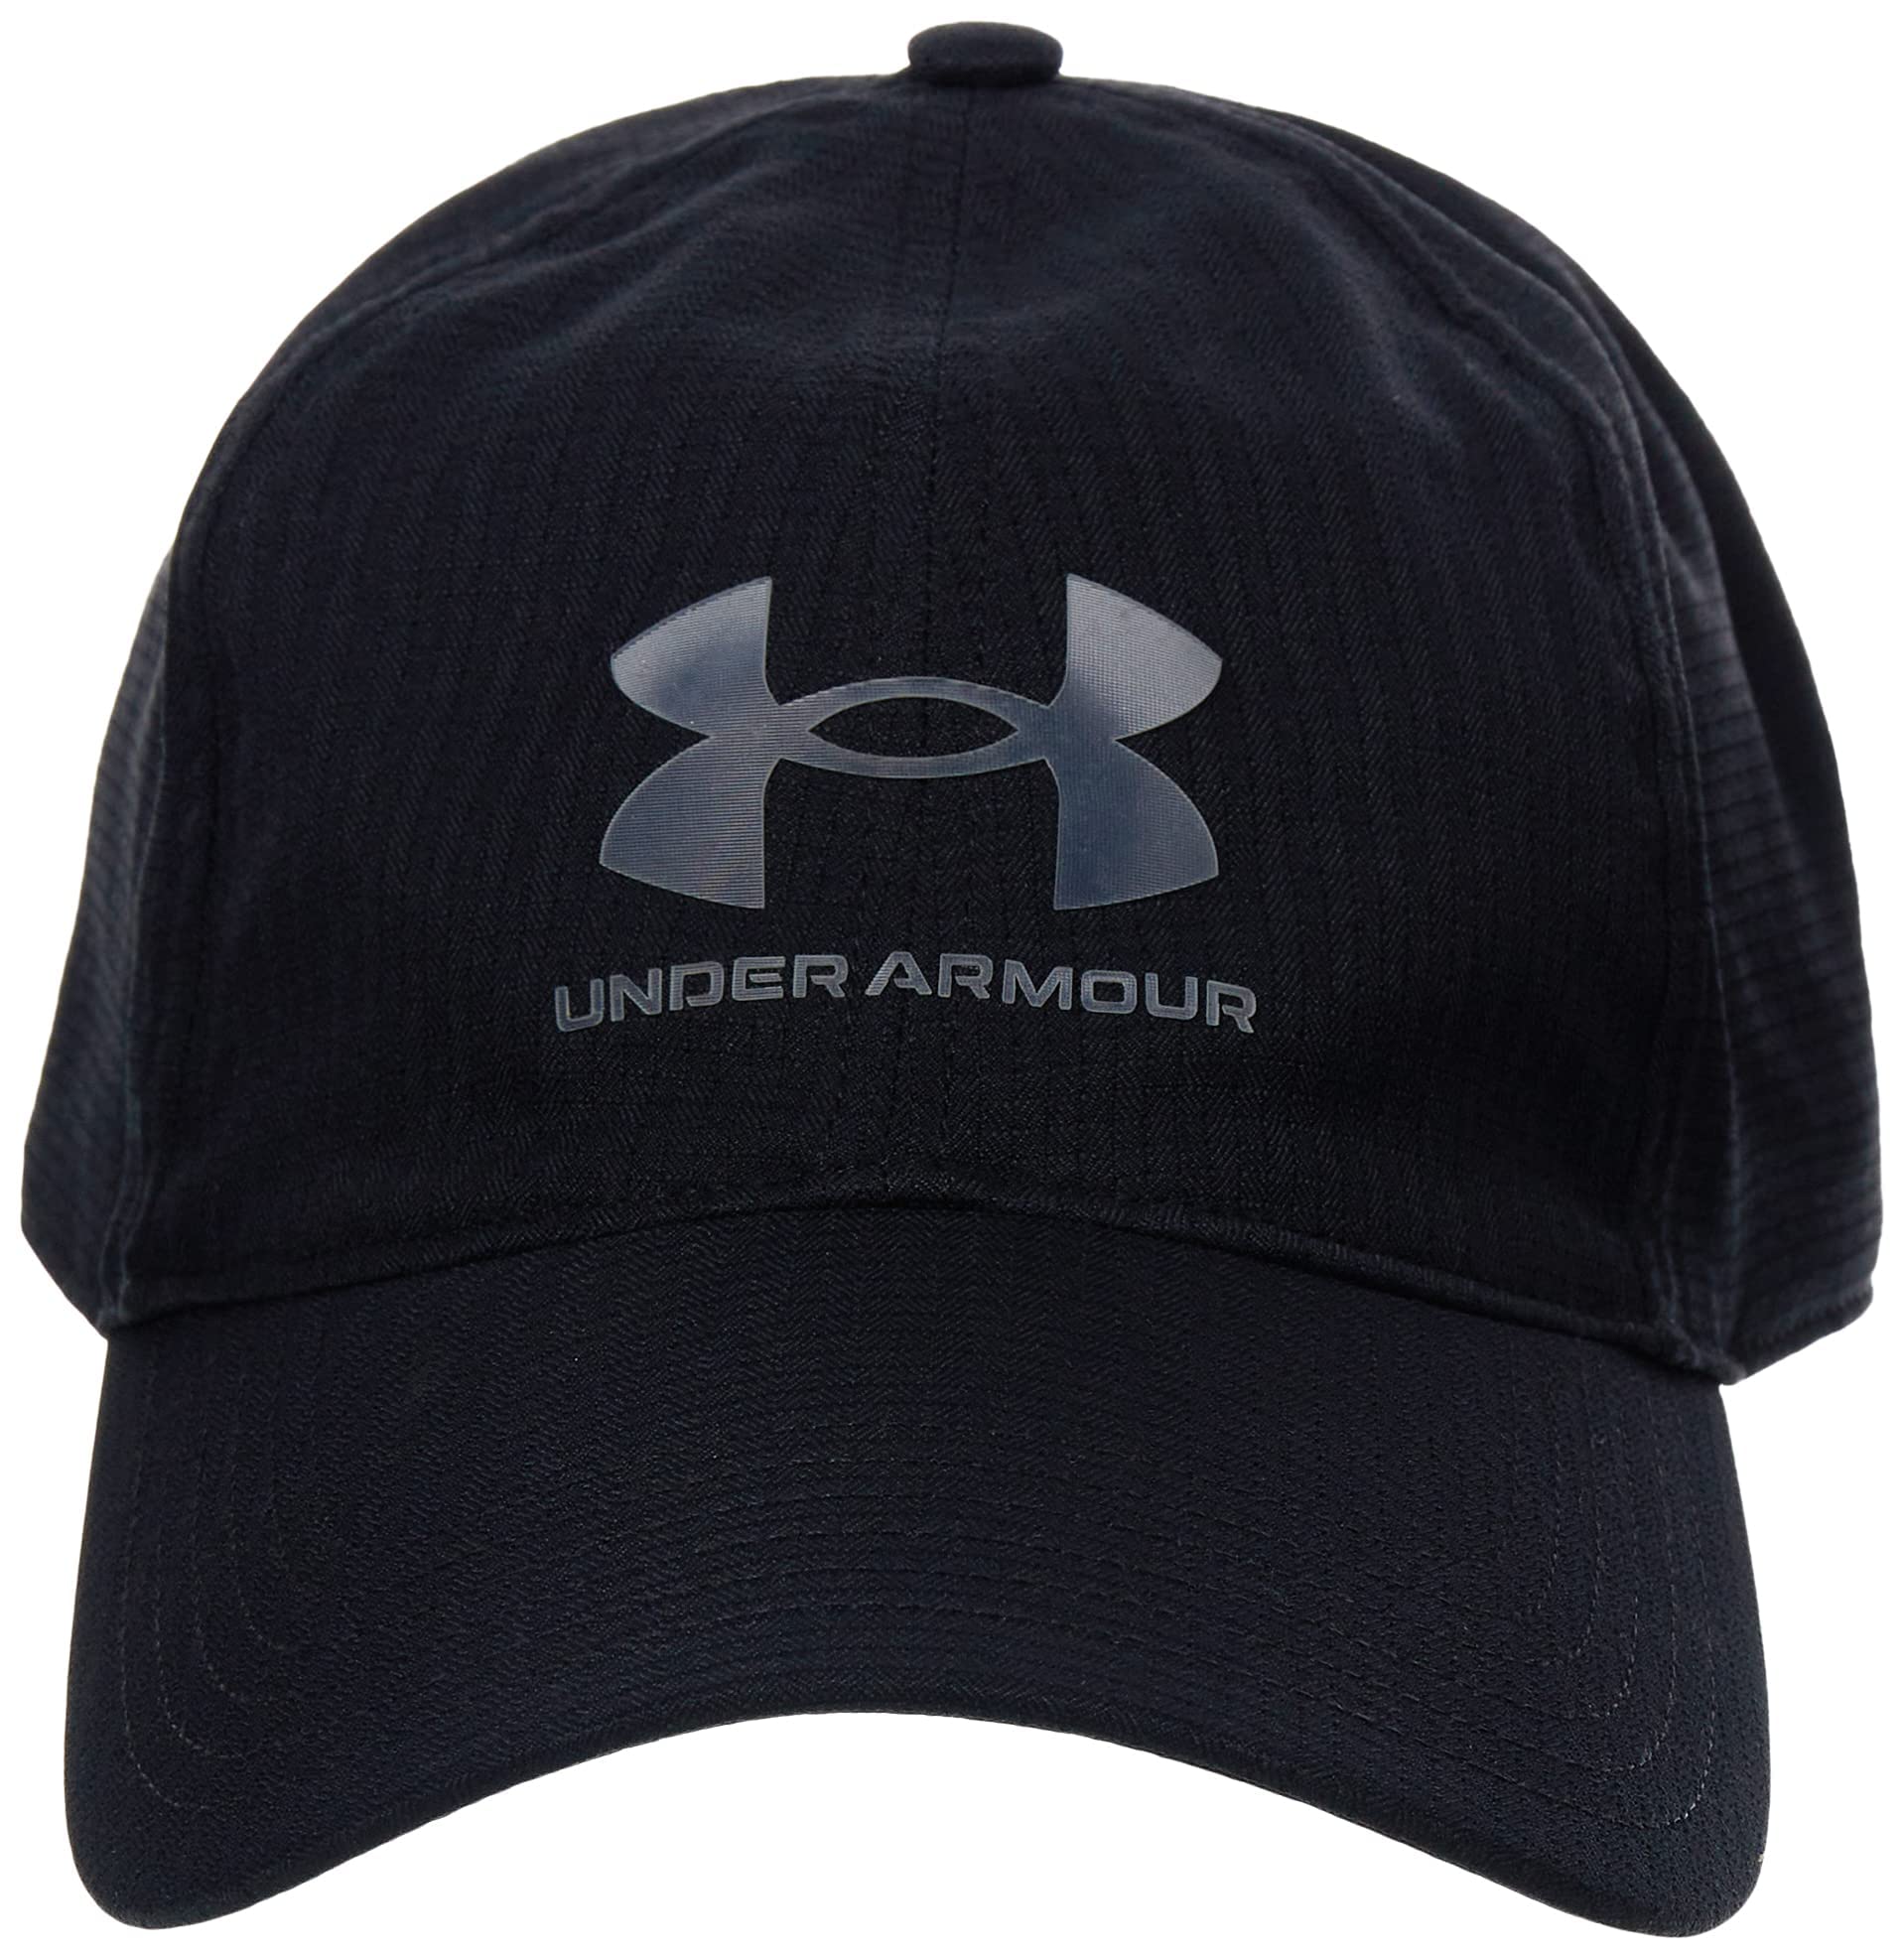 Under Armour Men's ArmourVent Adjustable Hat